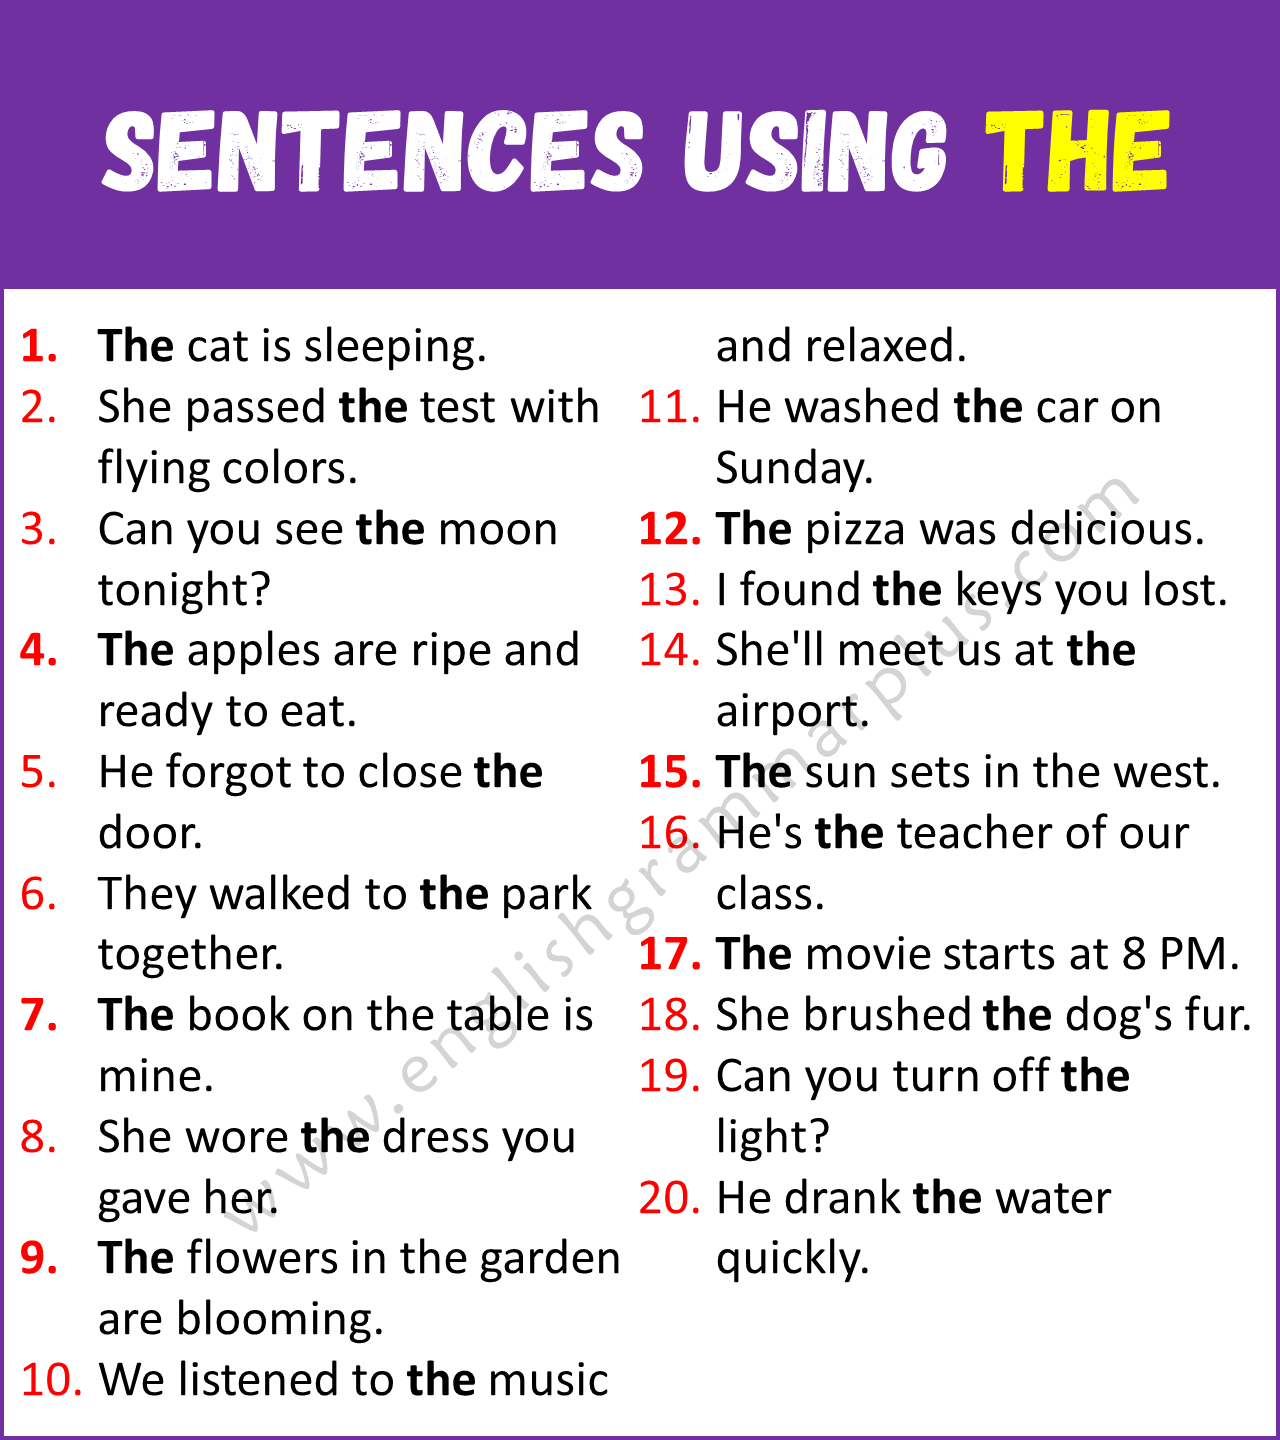 Sentences Using THE